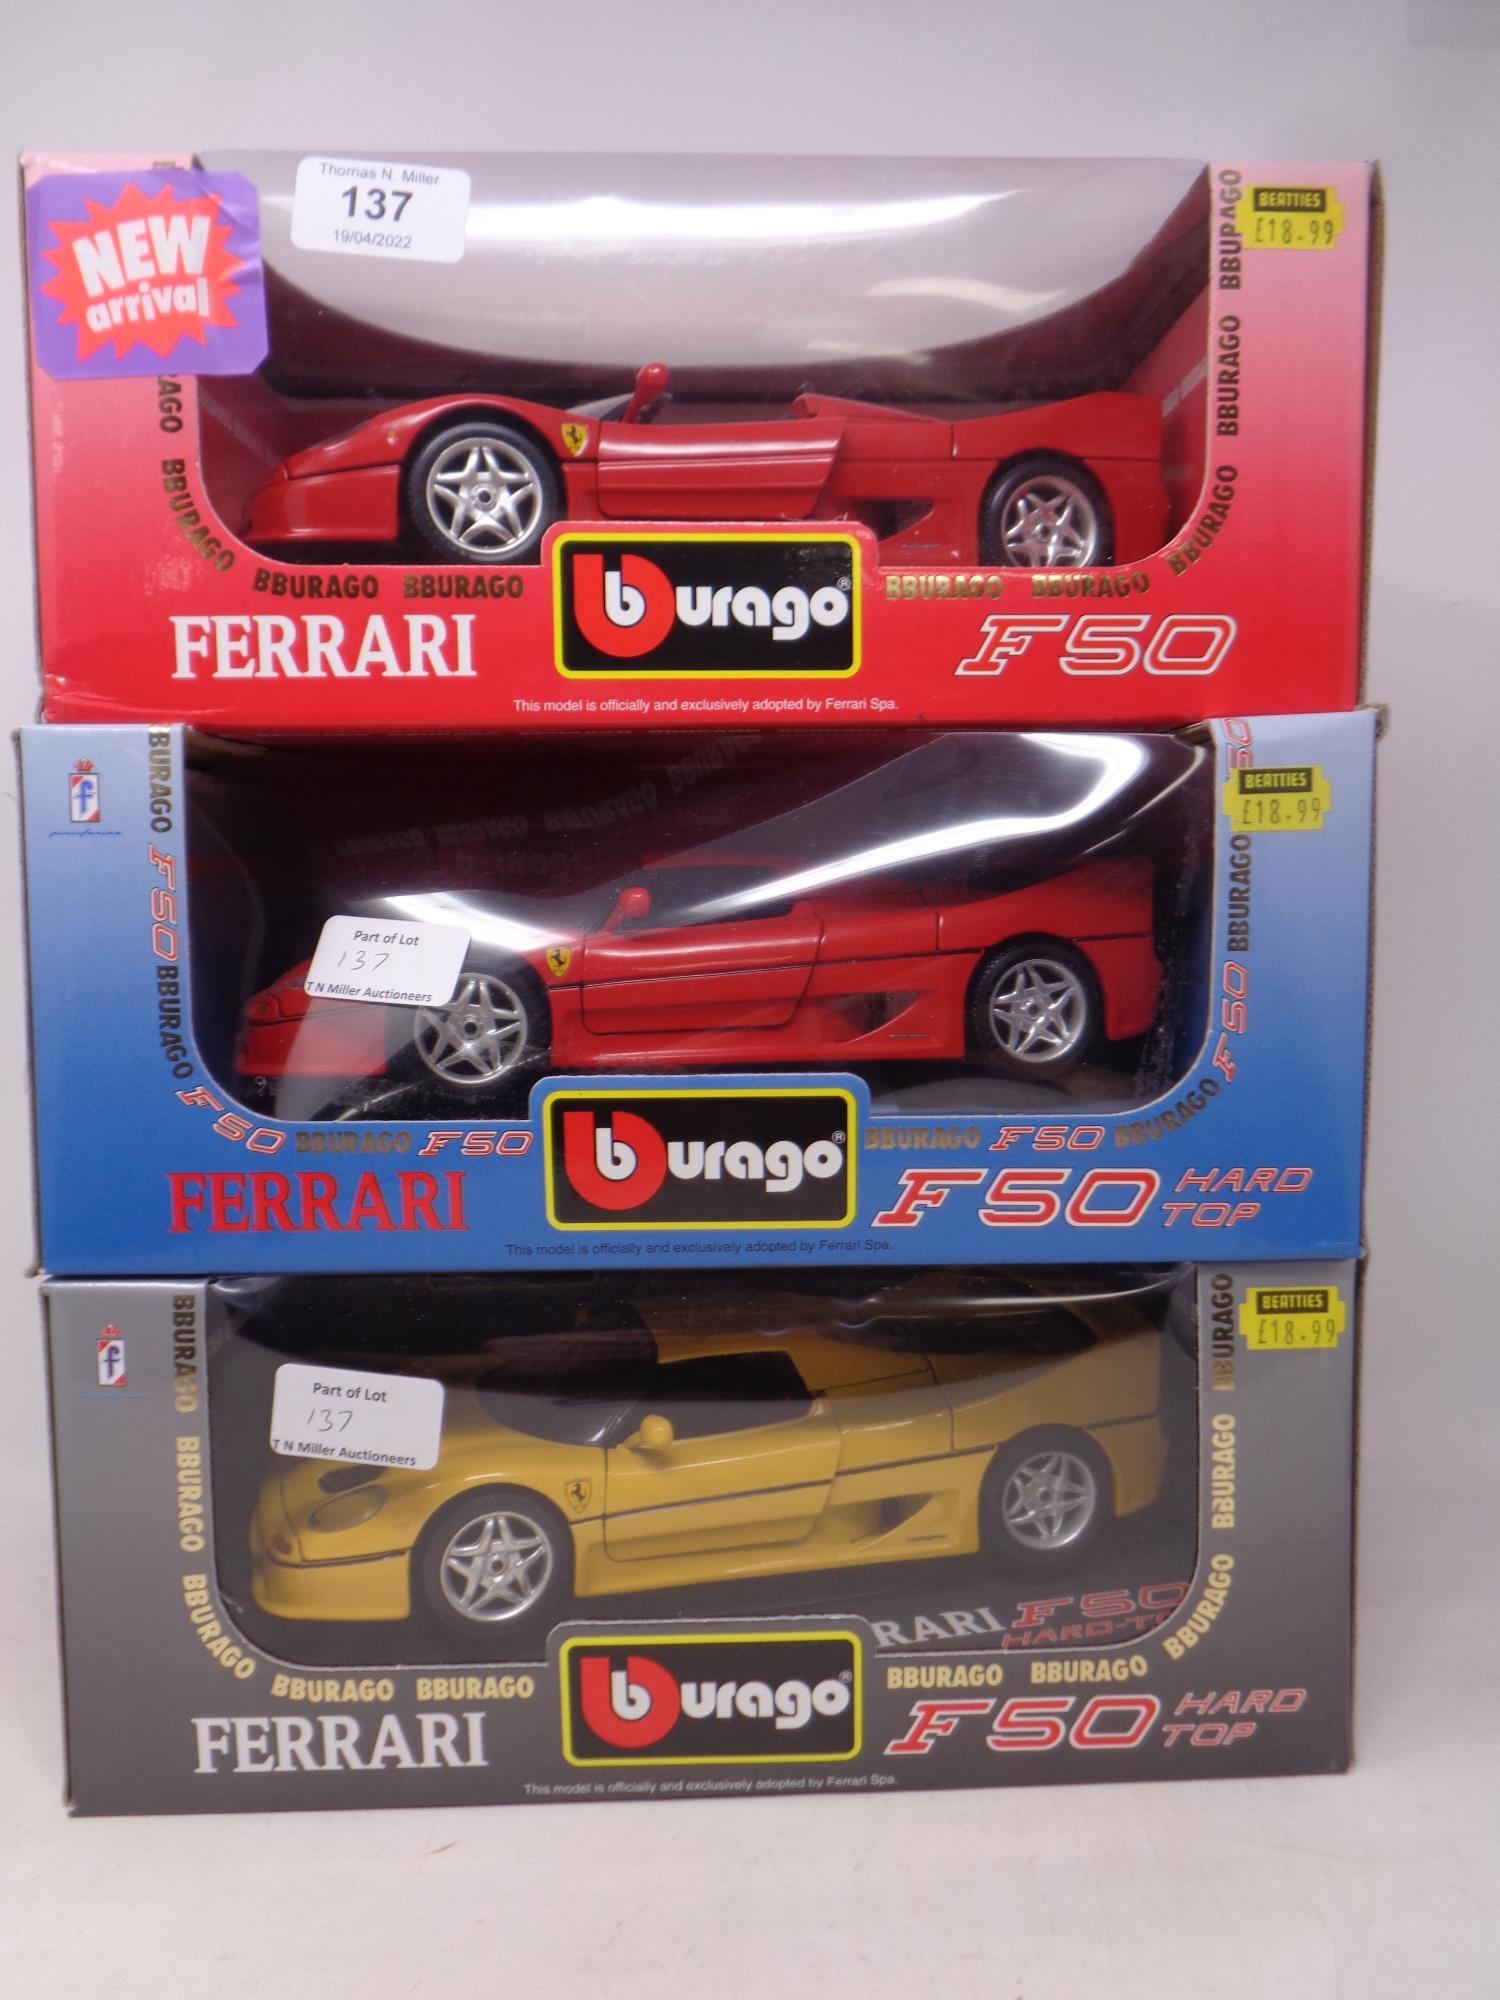 Three Burago 1:18 die cast cars - Ferrari F50 and two Ferrari F50 hard top,